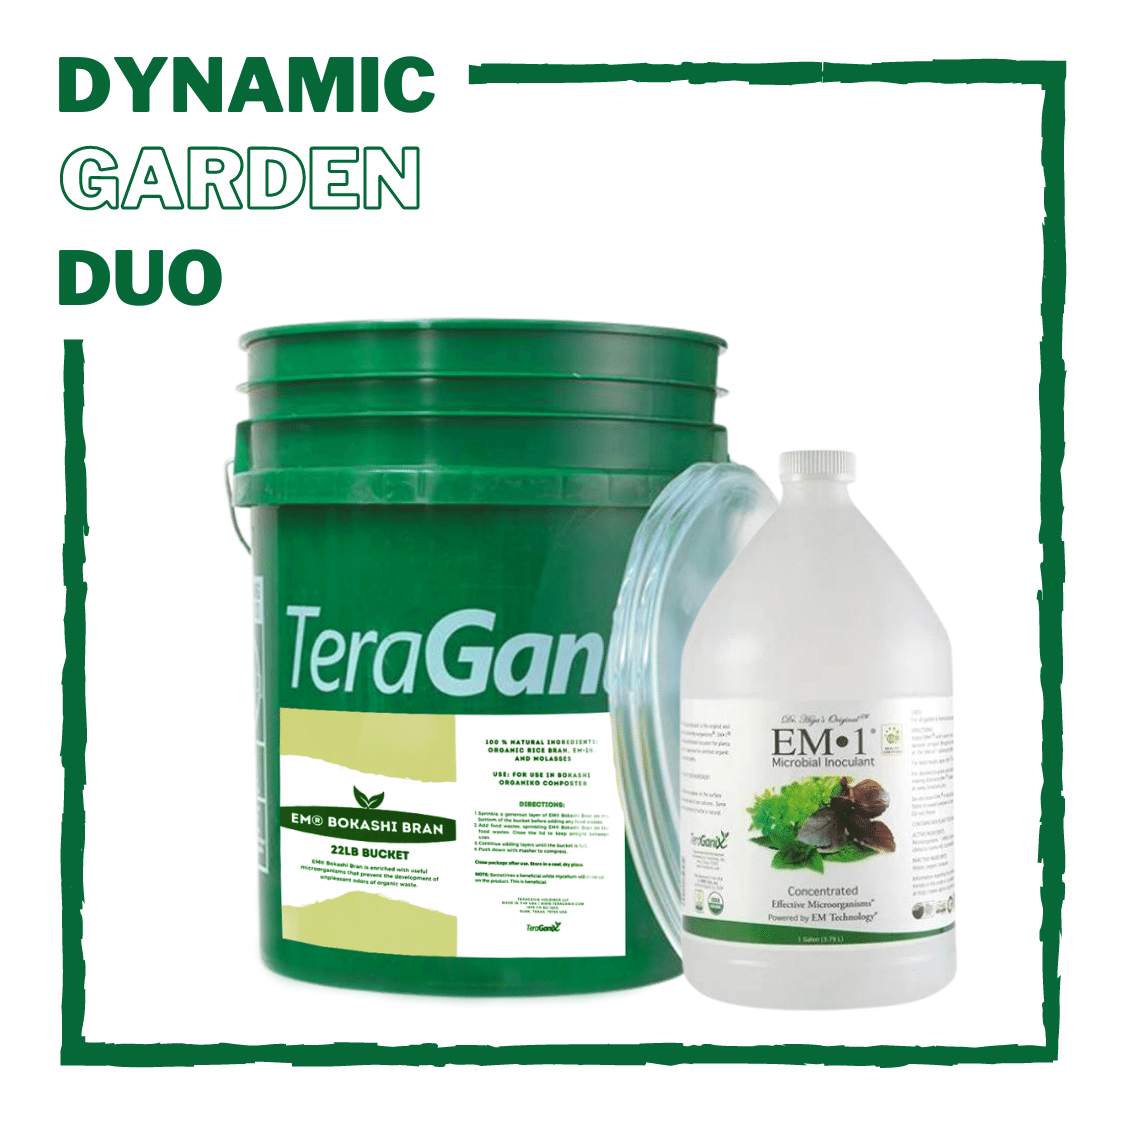 TeraGanix Gardening 1 Gallon Bottle EM-1® + 22 lb Bucket EM® Premium Bokashi Dynamic Garden Duo EM